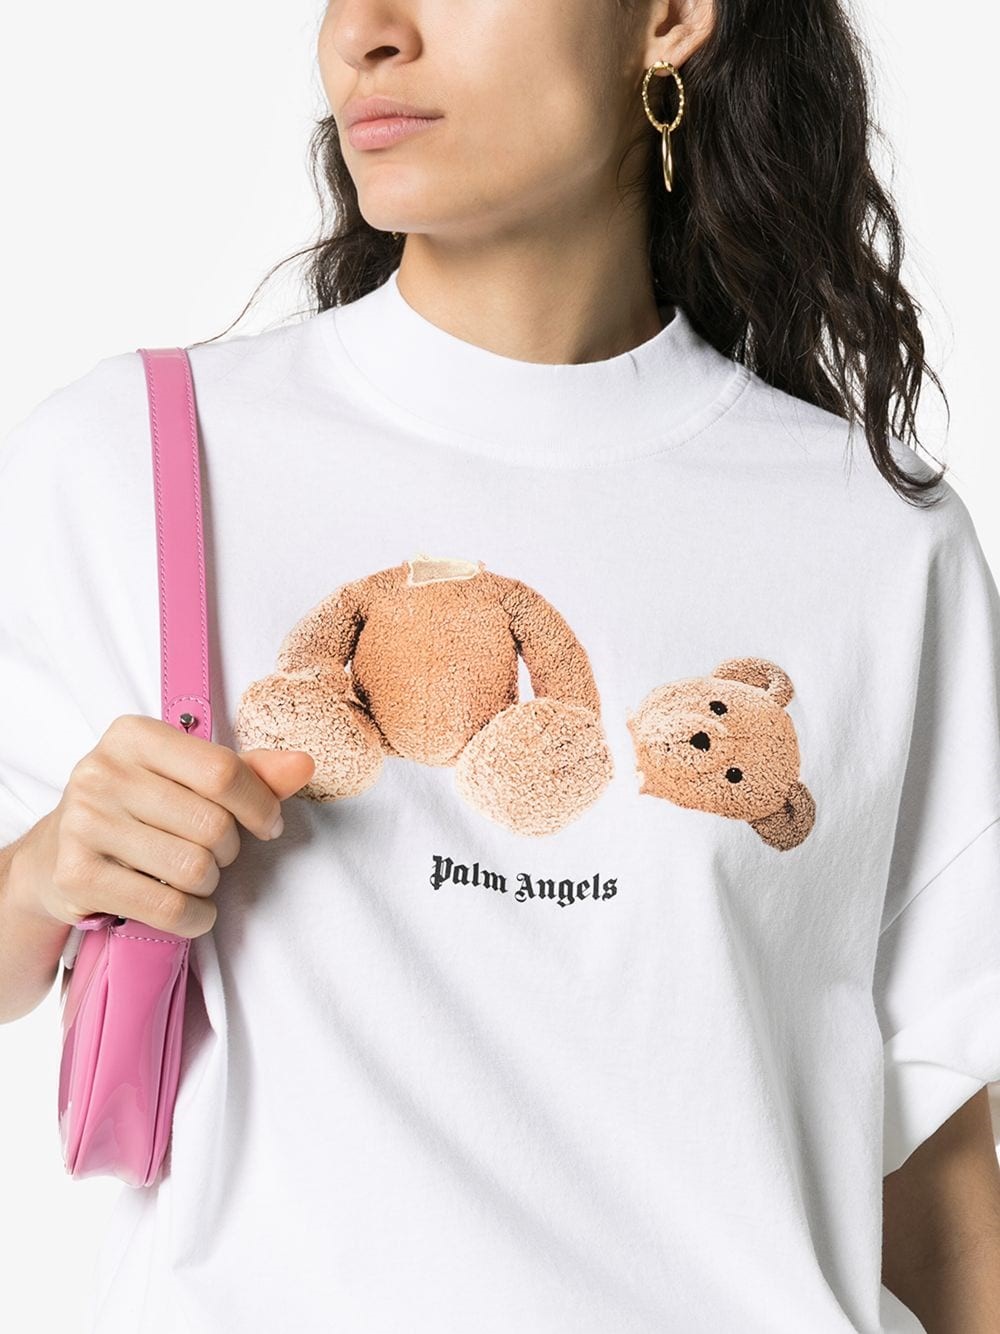 palm angels pink bear t shirt